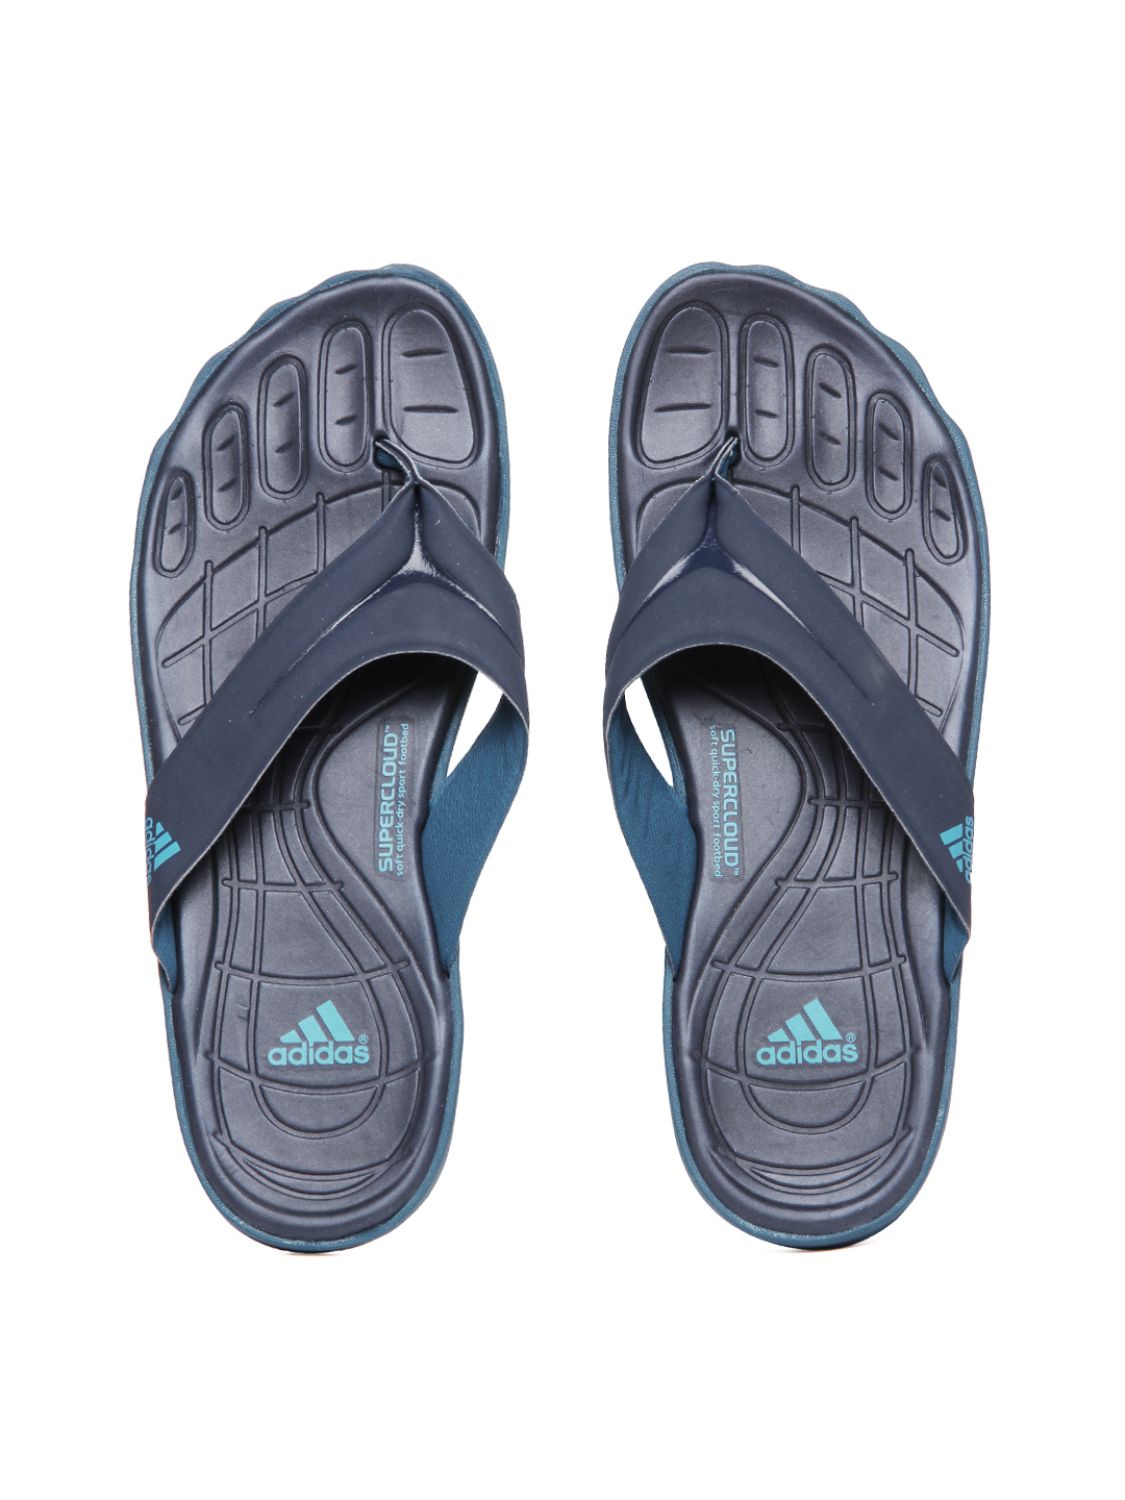 adidas adipure slide sc slippers